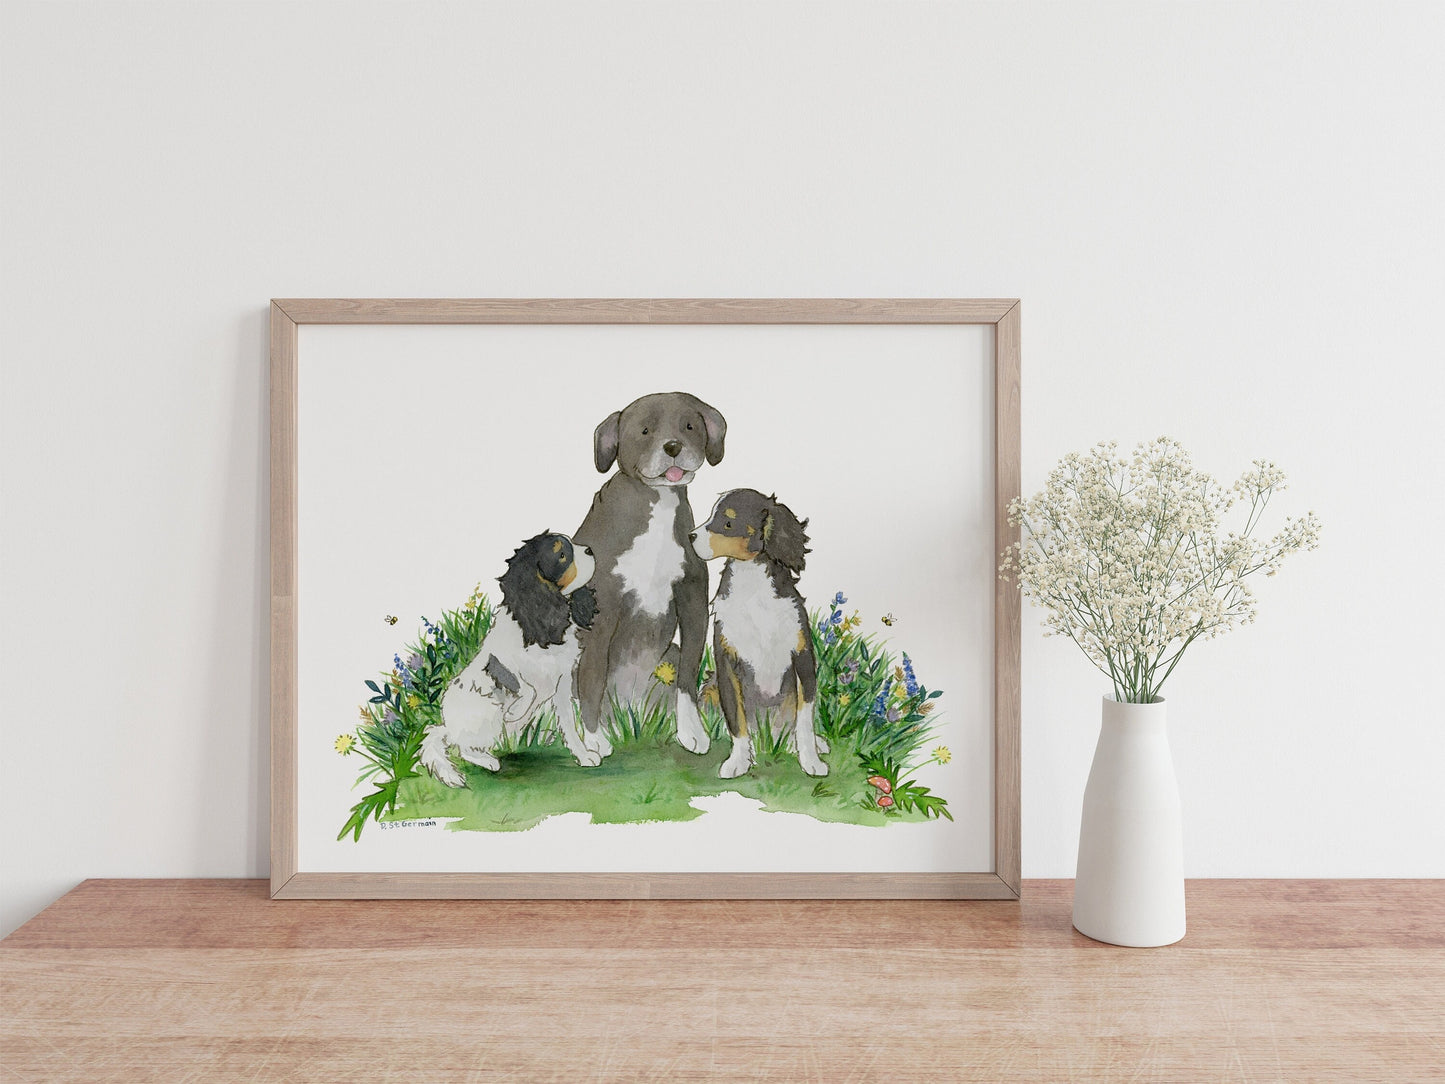 Watercolor Dog Art Print, Cavalier King Charles Spaniel, Lab Pitbull Art, Gift for Dog Lovers, Cute Dog Print, Cavalier Gift, Pitbull Gift